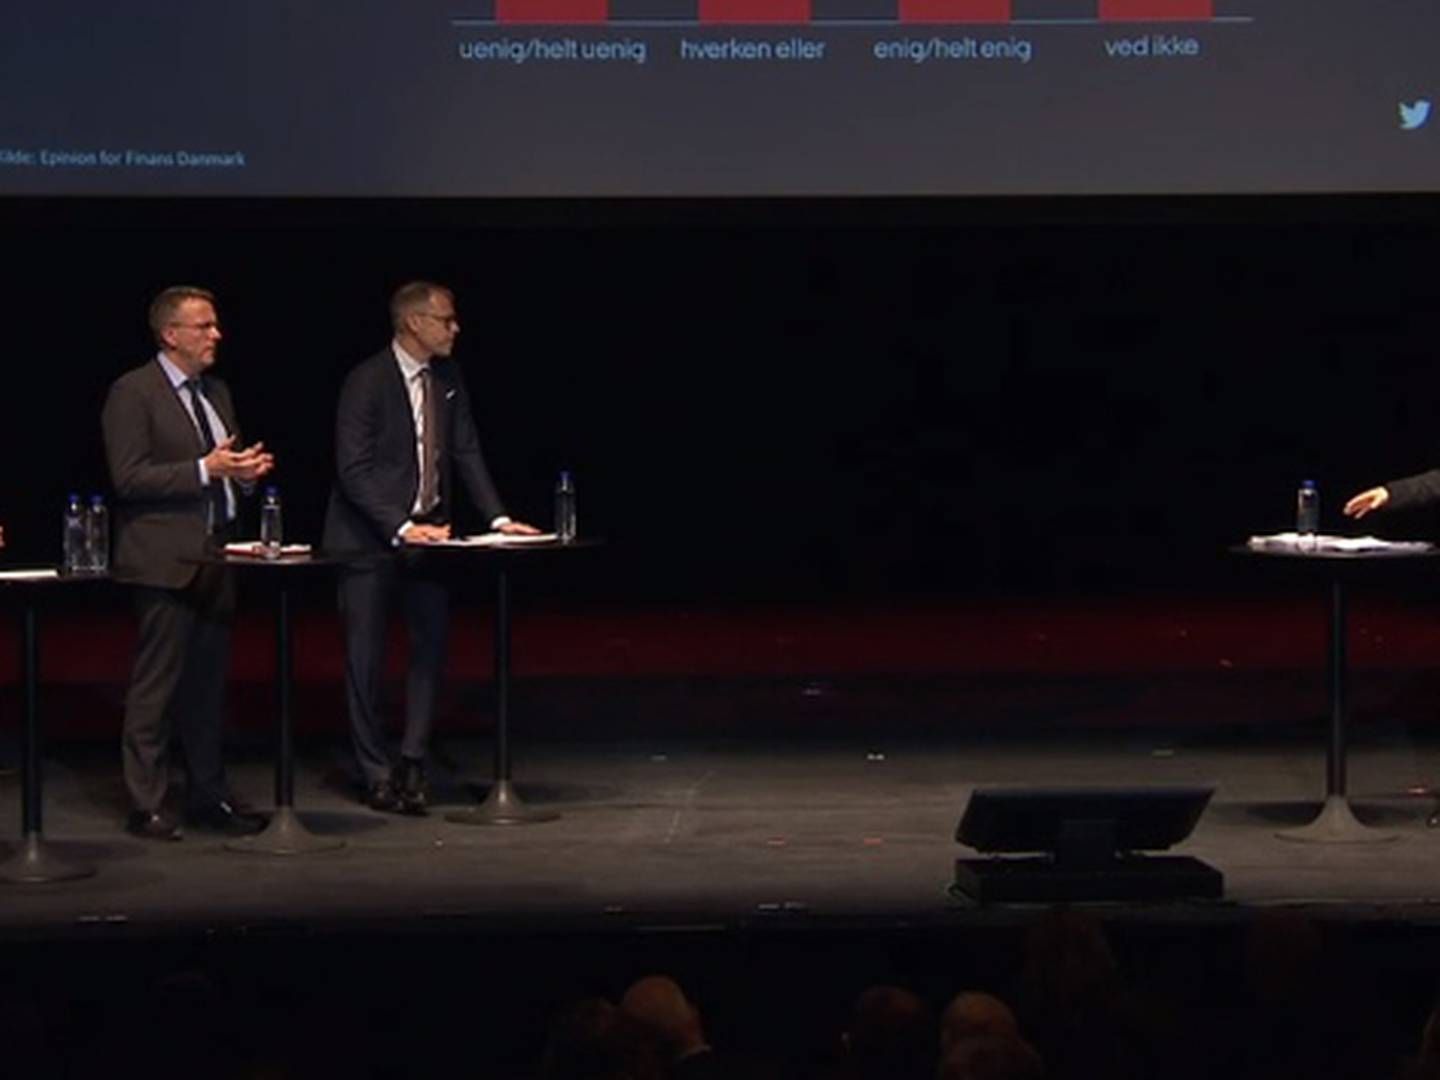 Debat ved Finans Danmarks årsmøde